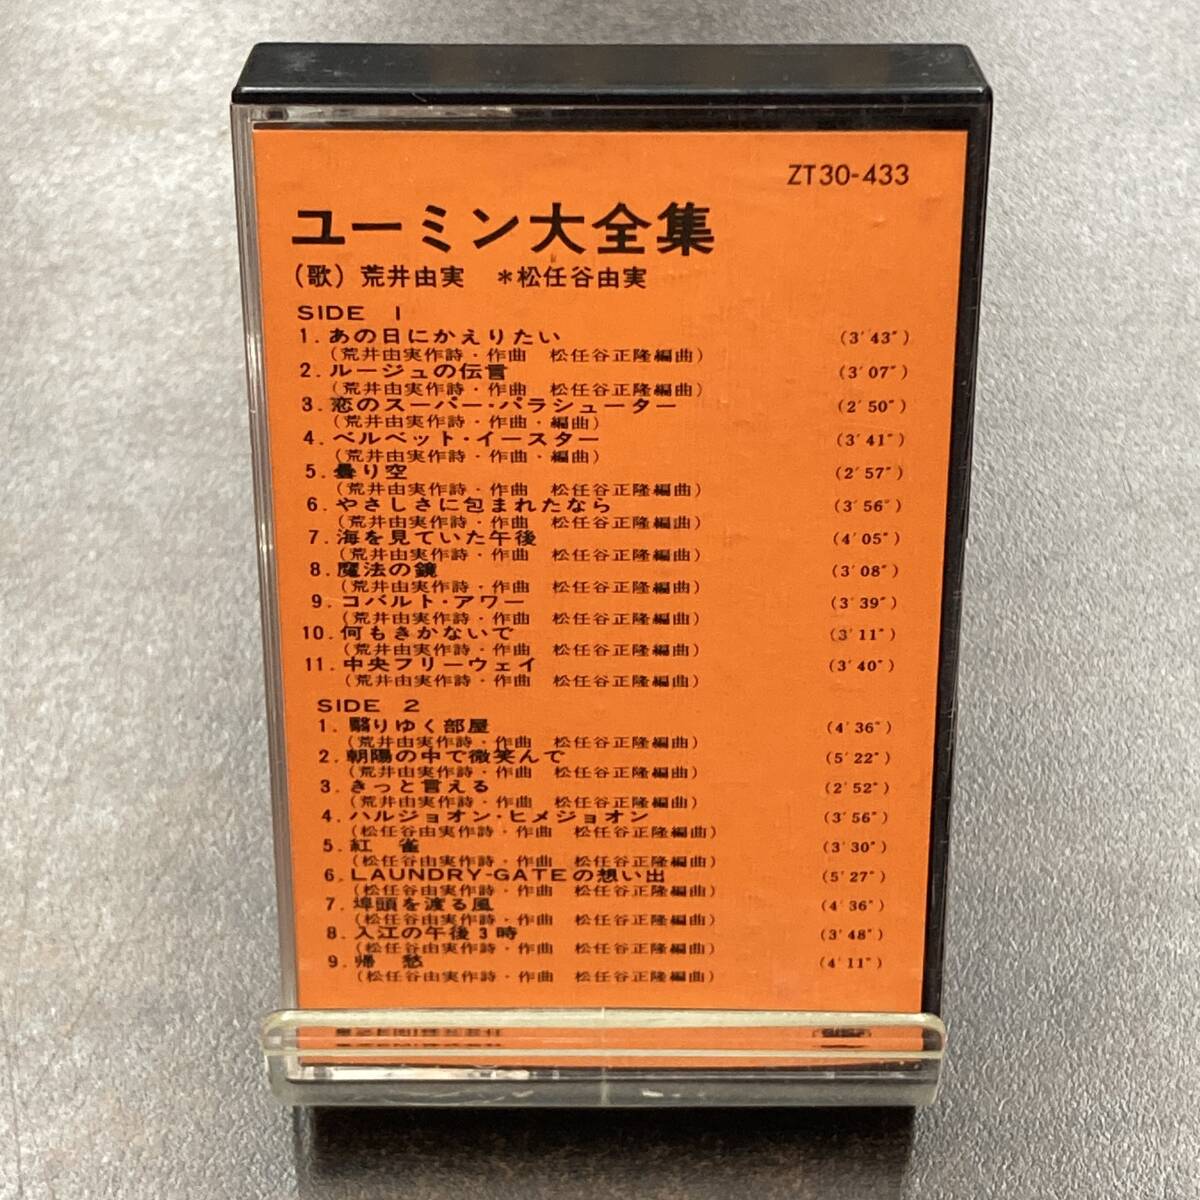 1029M 荒井由実 ユーミン大全集 カセットテープ / Yumi Arai Citypop Cassette Tapeの画像1